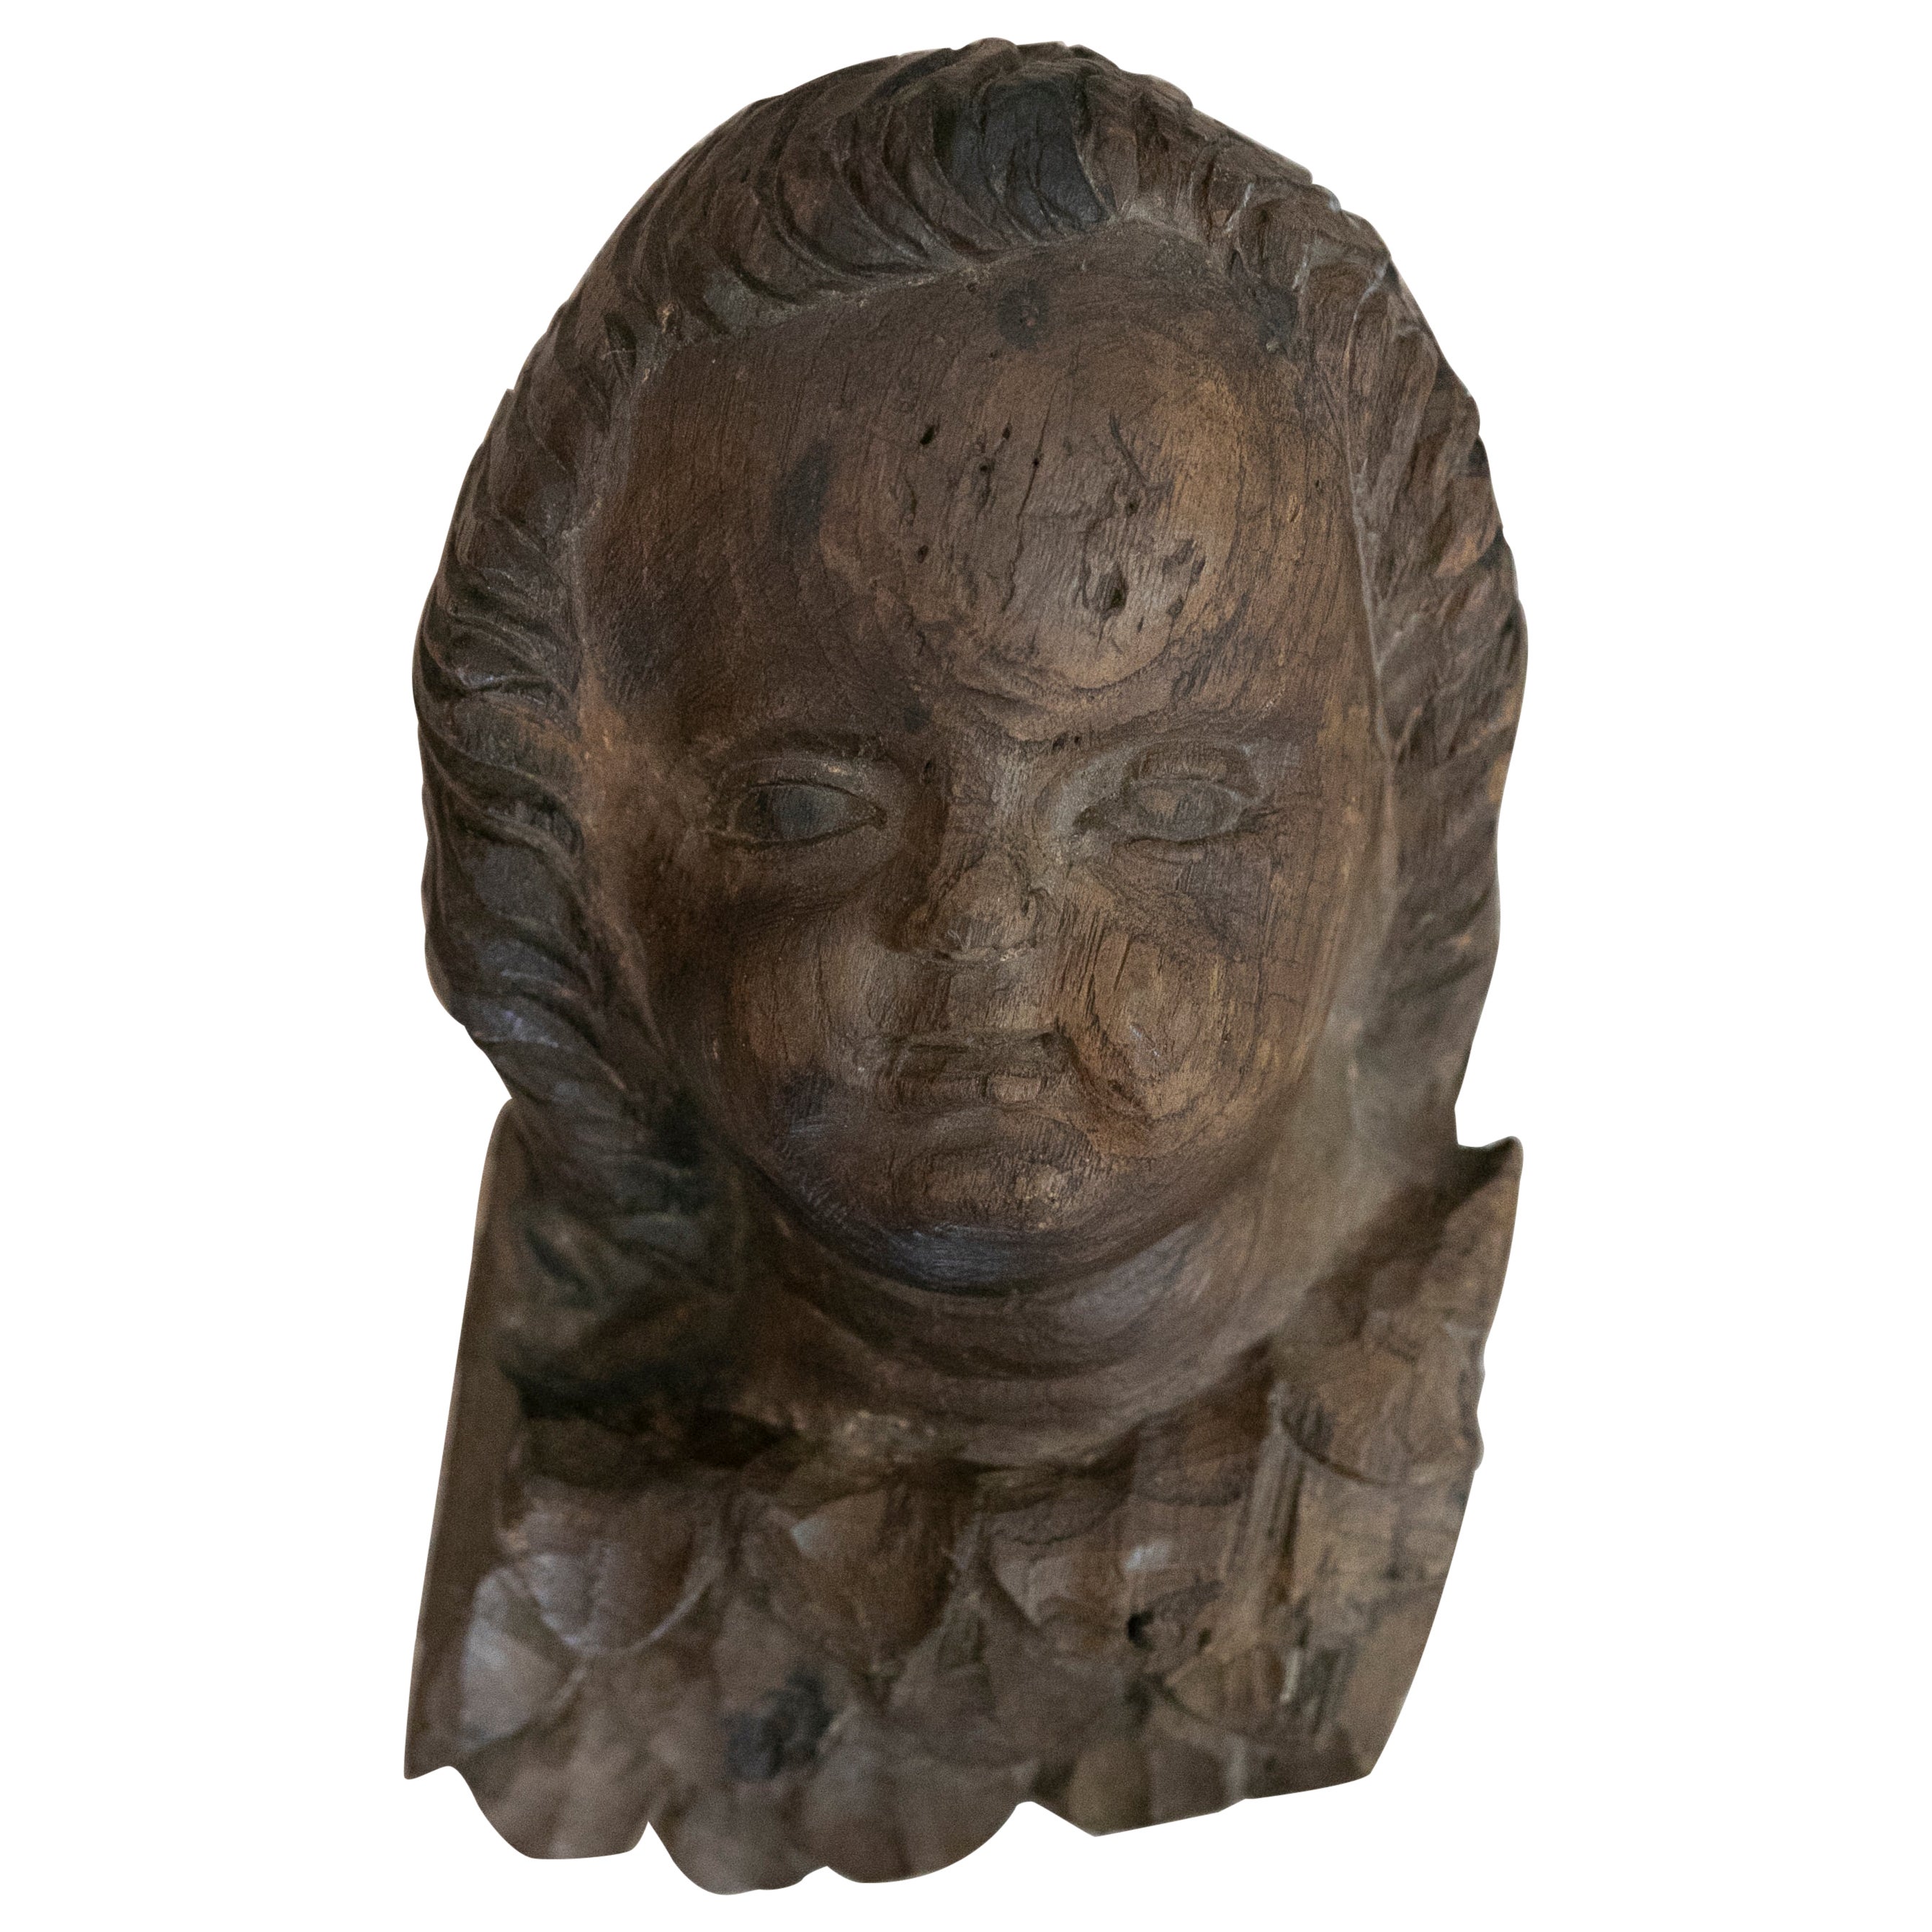 Angel's Head-Skulptur aus Holz, handgeschnitzt, 18. Jahrhundert